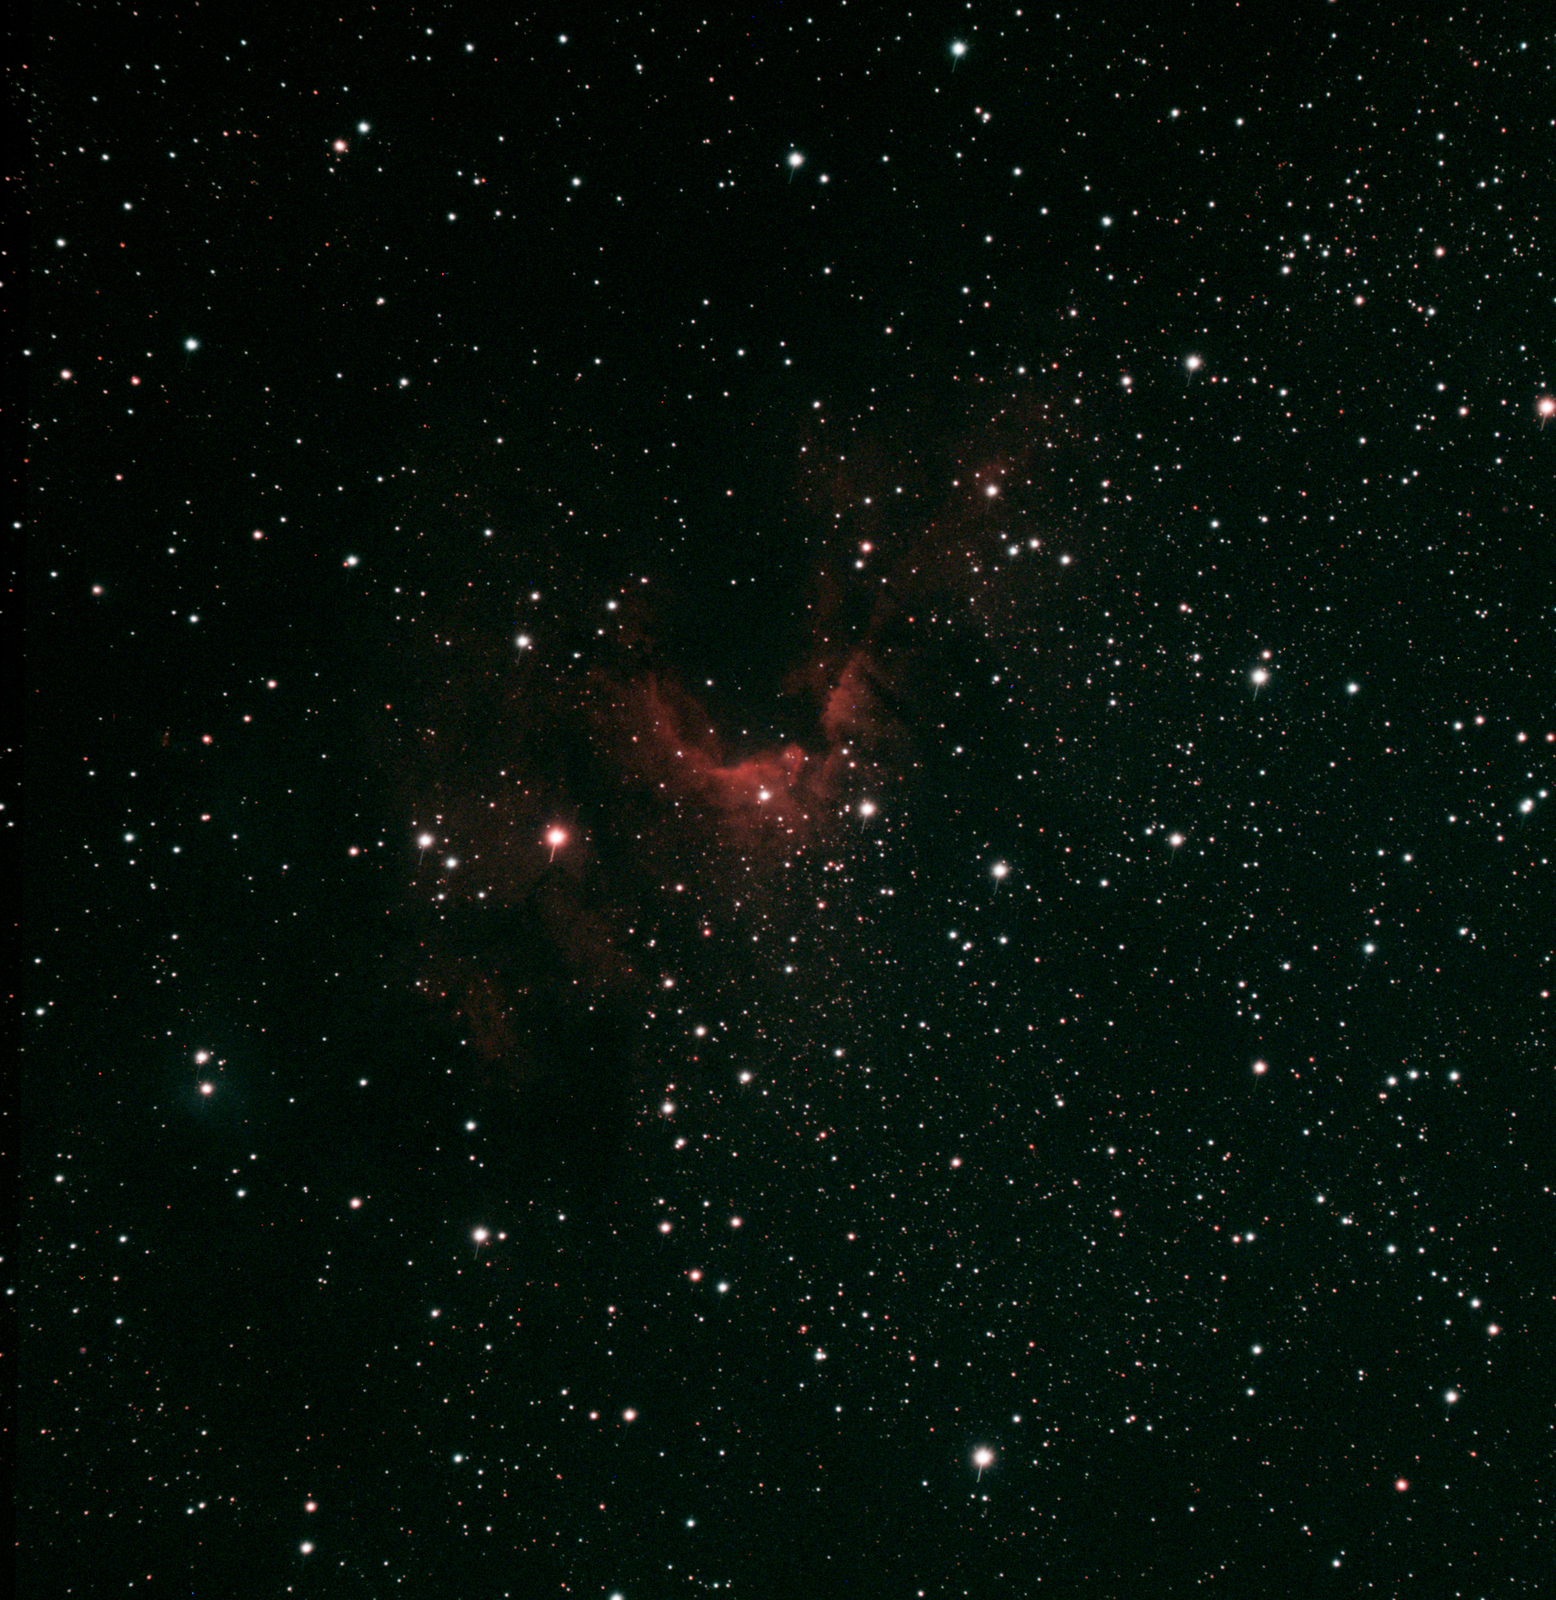 Cave Nebula or Sharpless 2-155, Caldwell 9